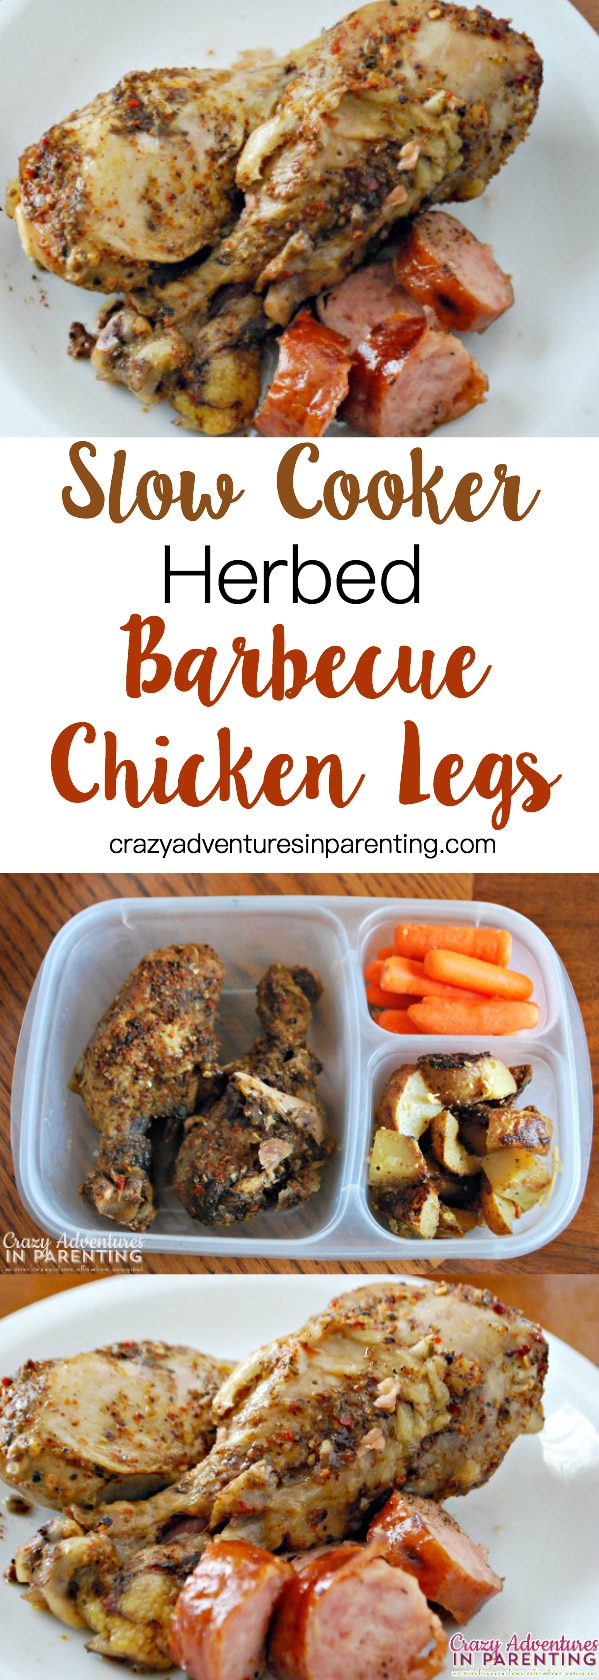 Slow Cooker Herbed Barbecue Chicken Legs